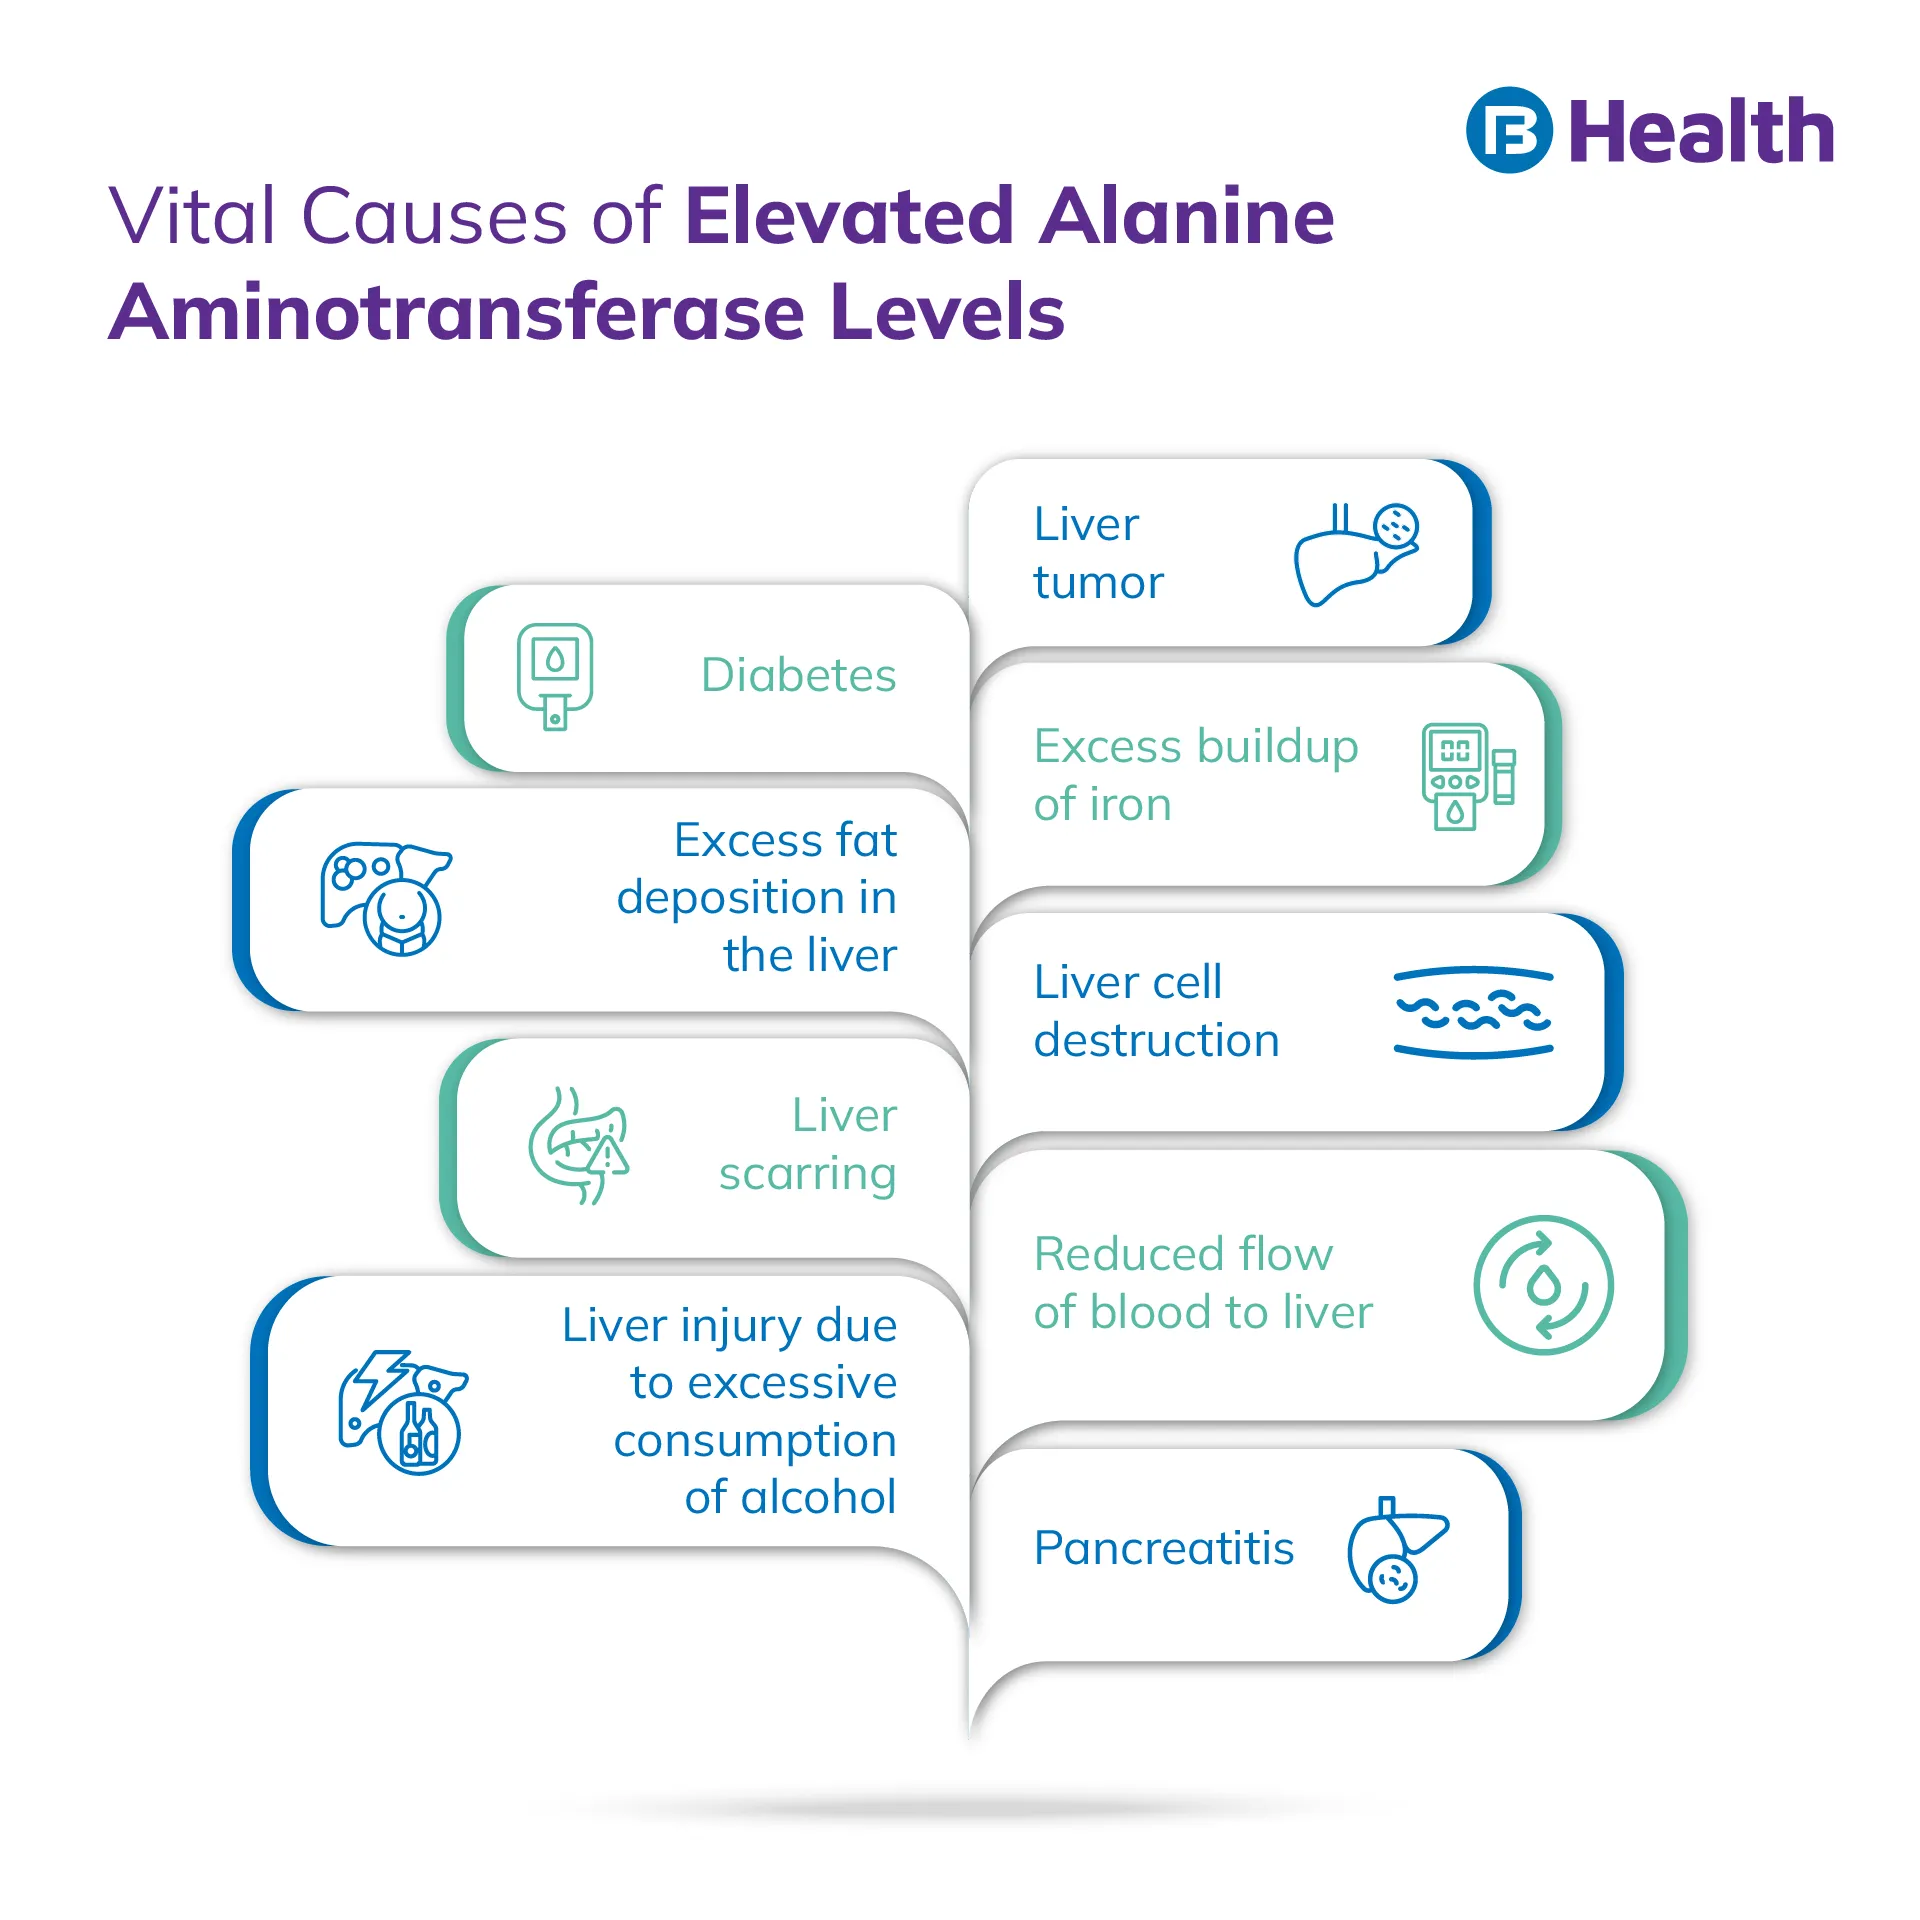 Alanine Aminotransferase levels